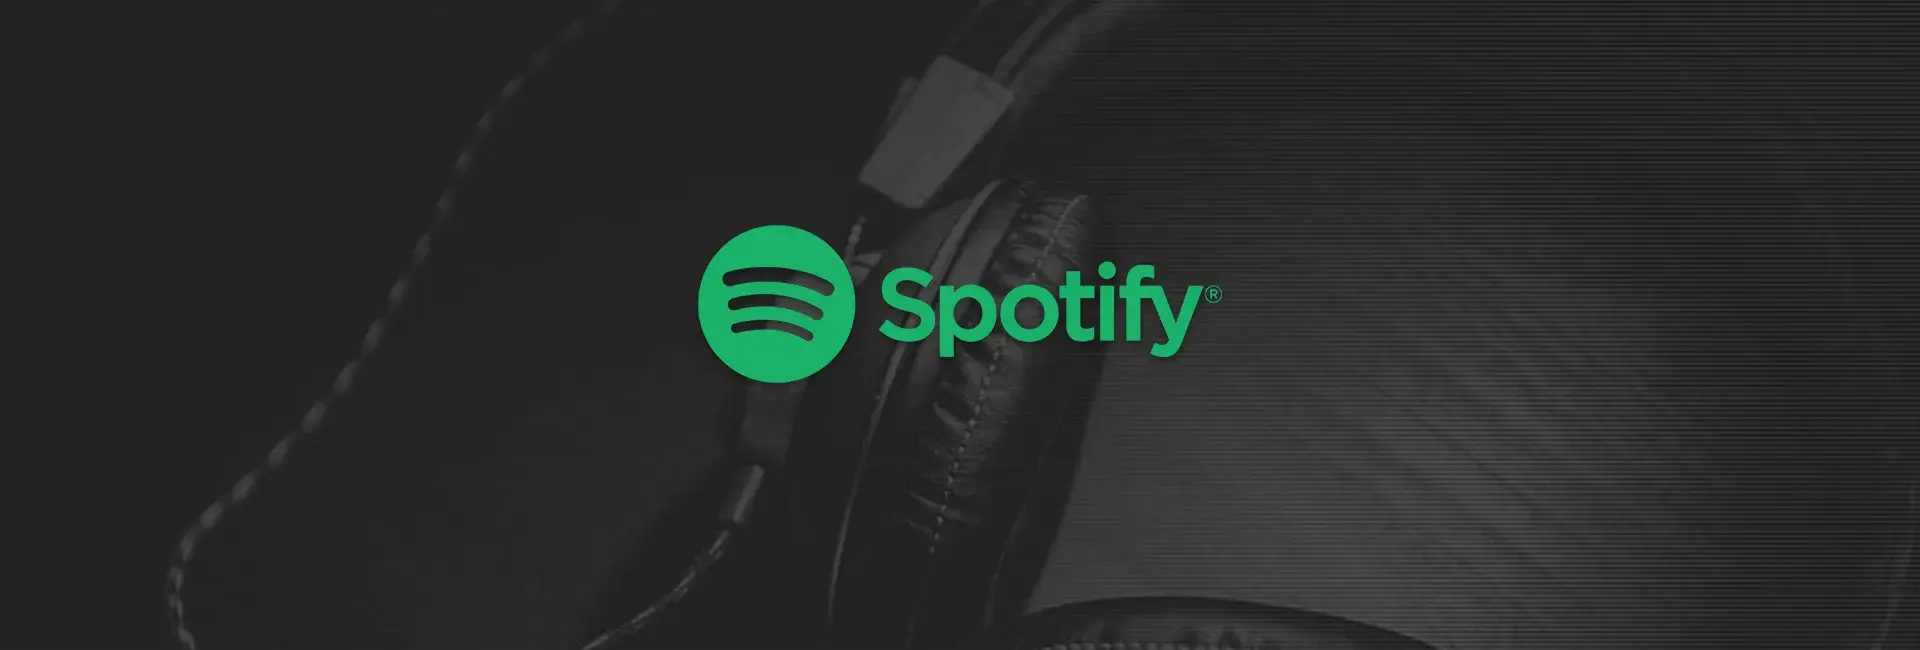 Spotify Premium (AU)